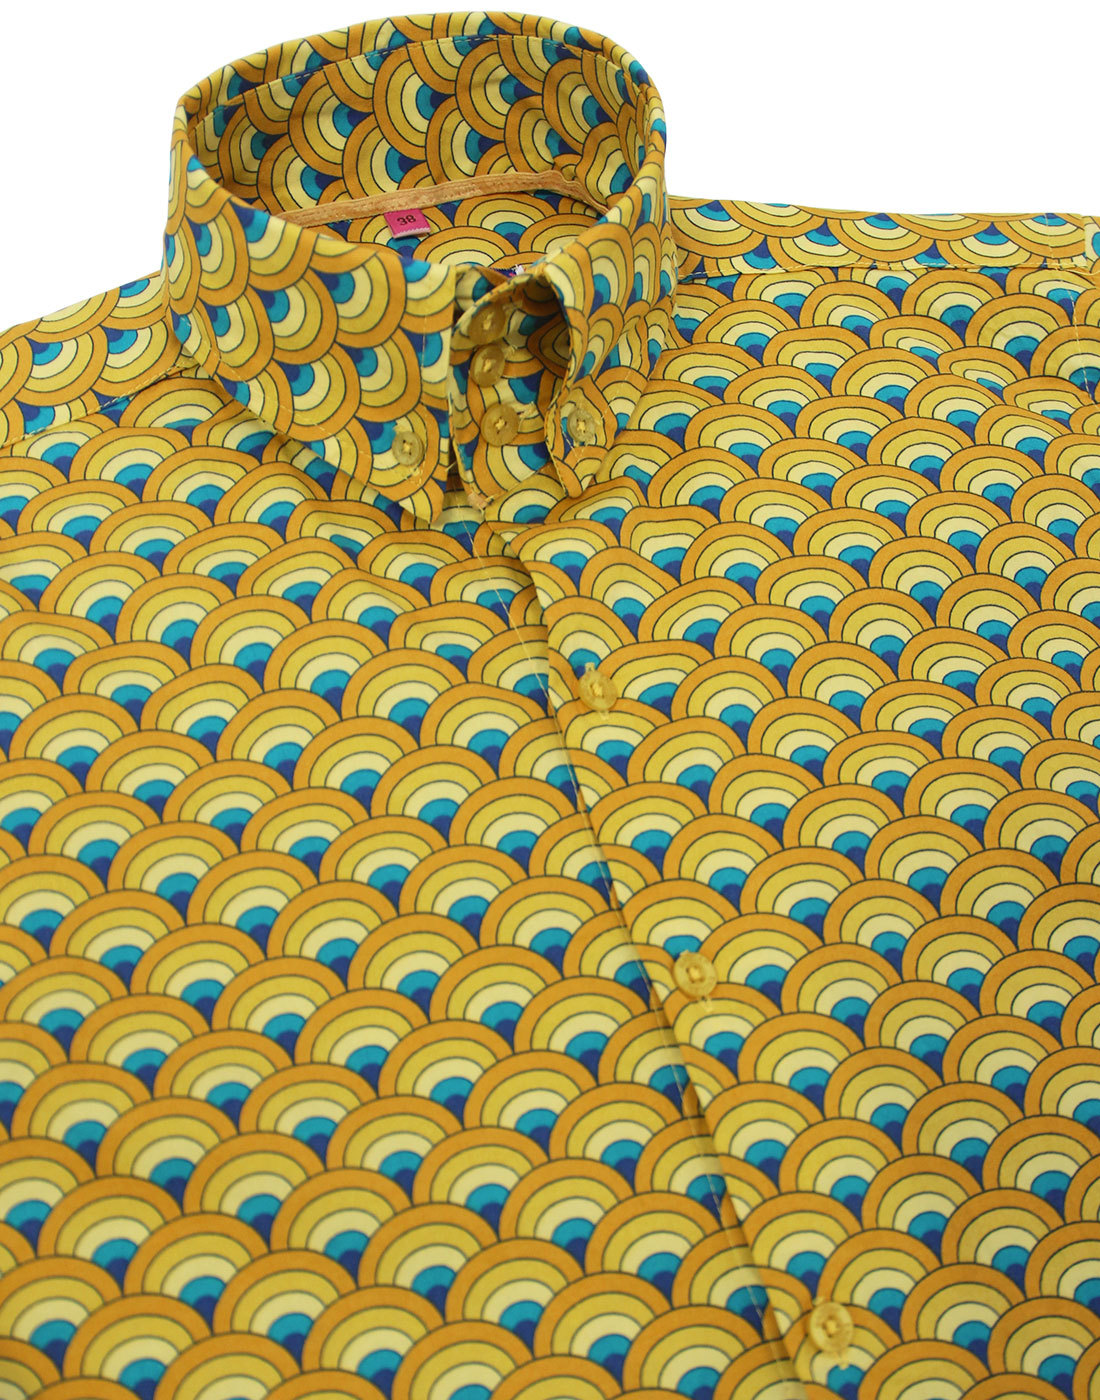 MADCAP ENGLAND Peacock Retro Mod Op Art Rainbow Shirt in Yellow